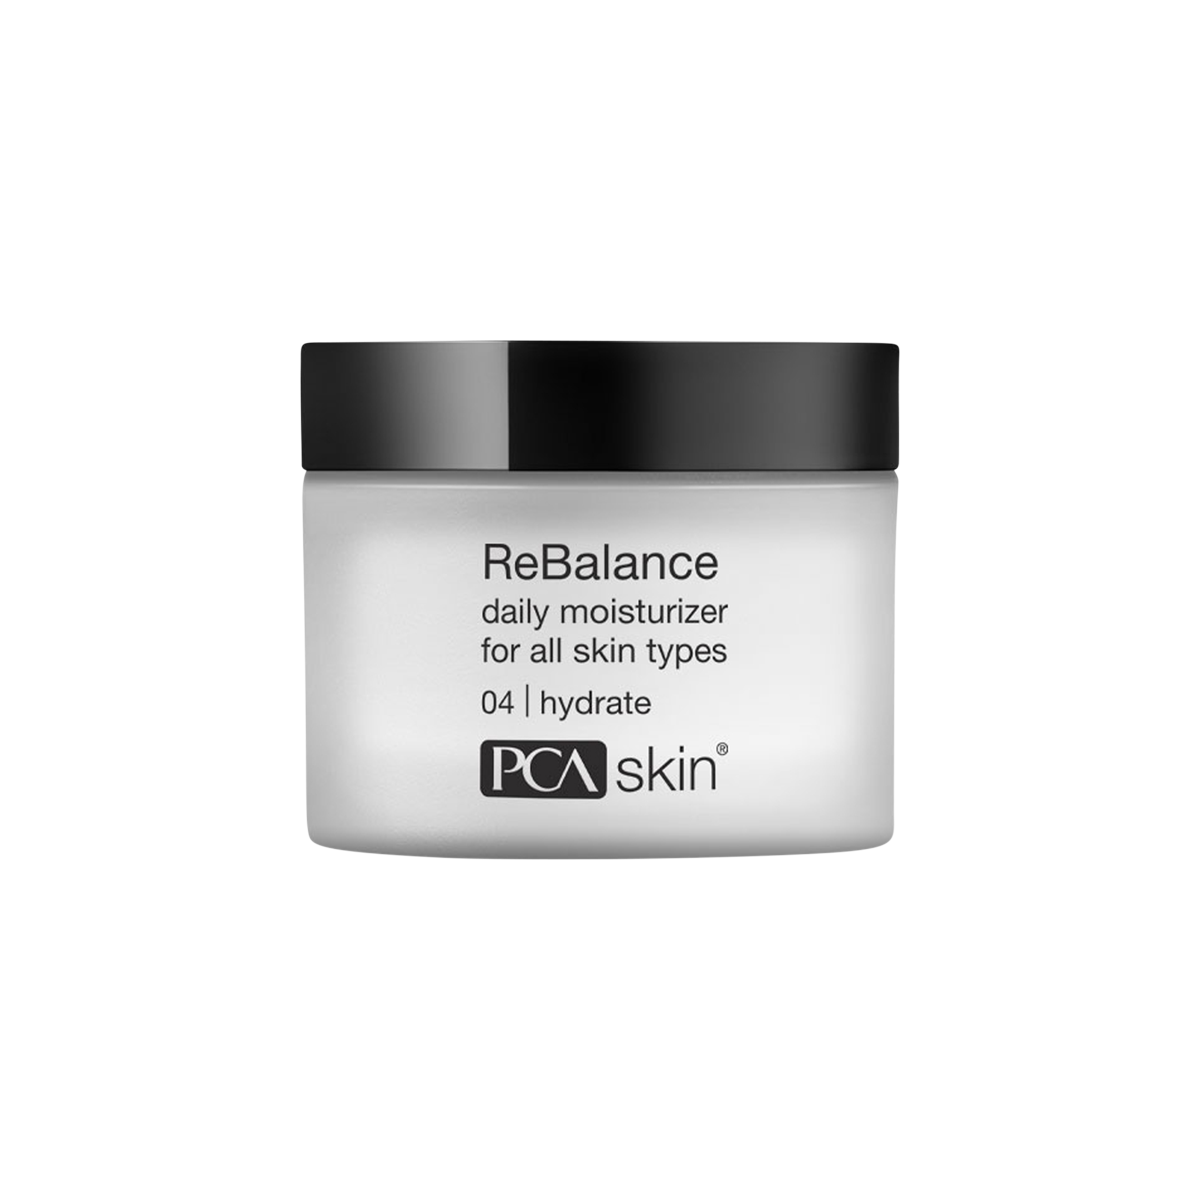 PCA Skin - ReBalance daily moisturizer